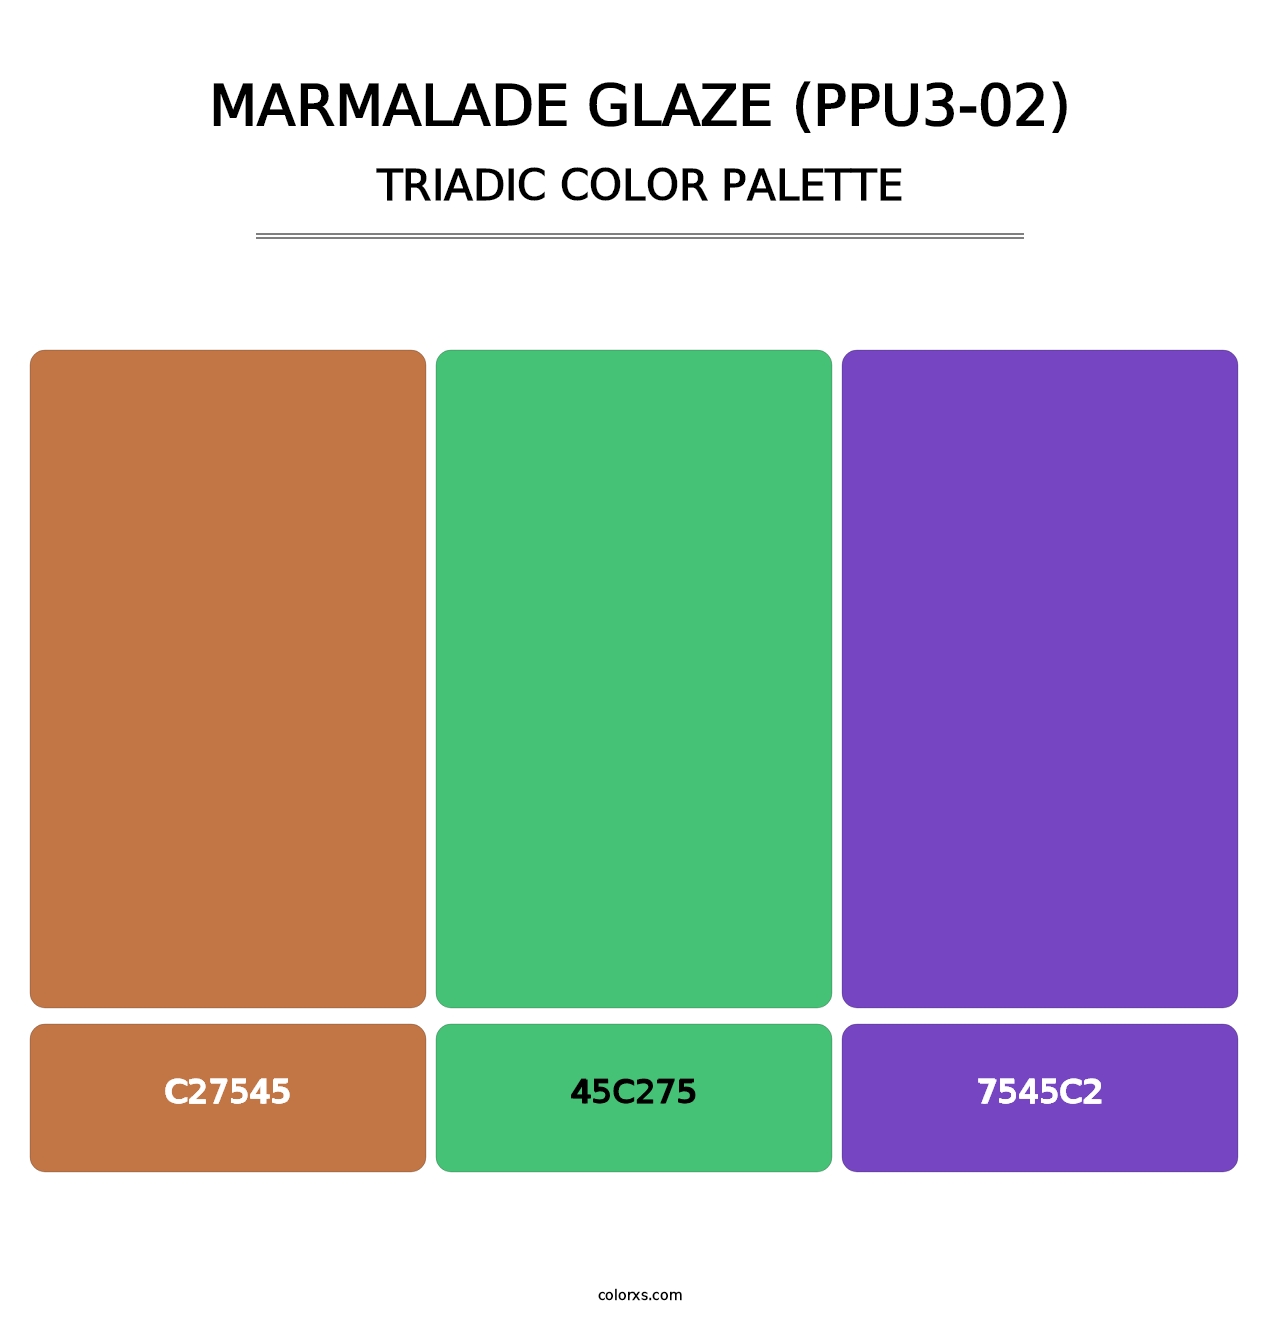 Marmalade Glaze (PPU3-02) - Triadic Color Palette